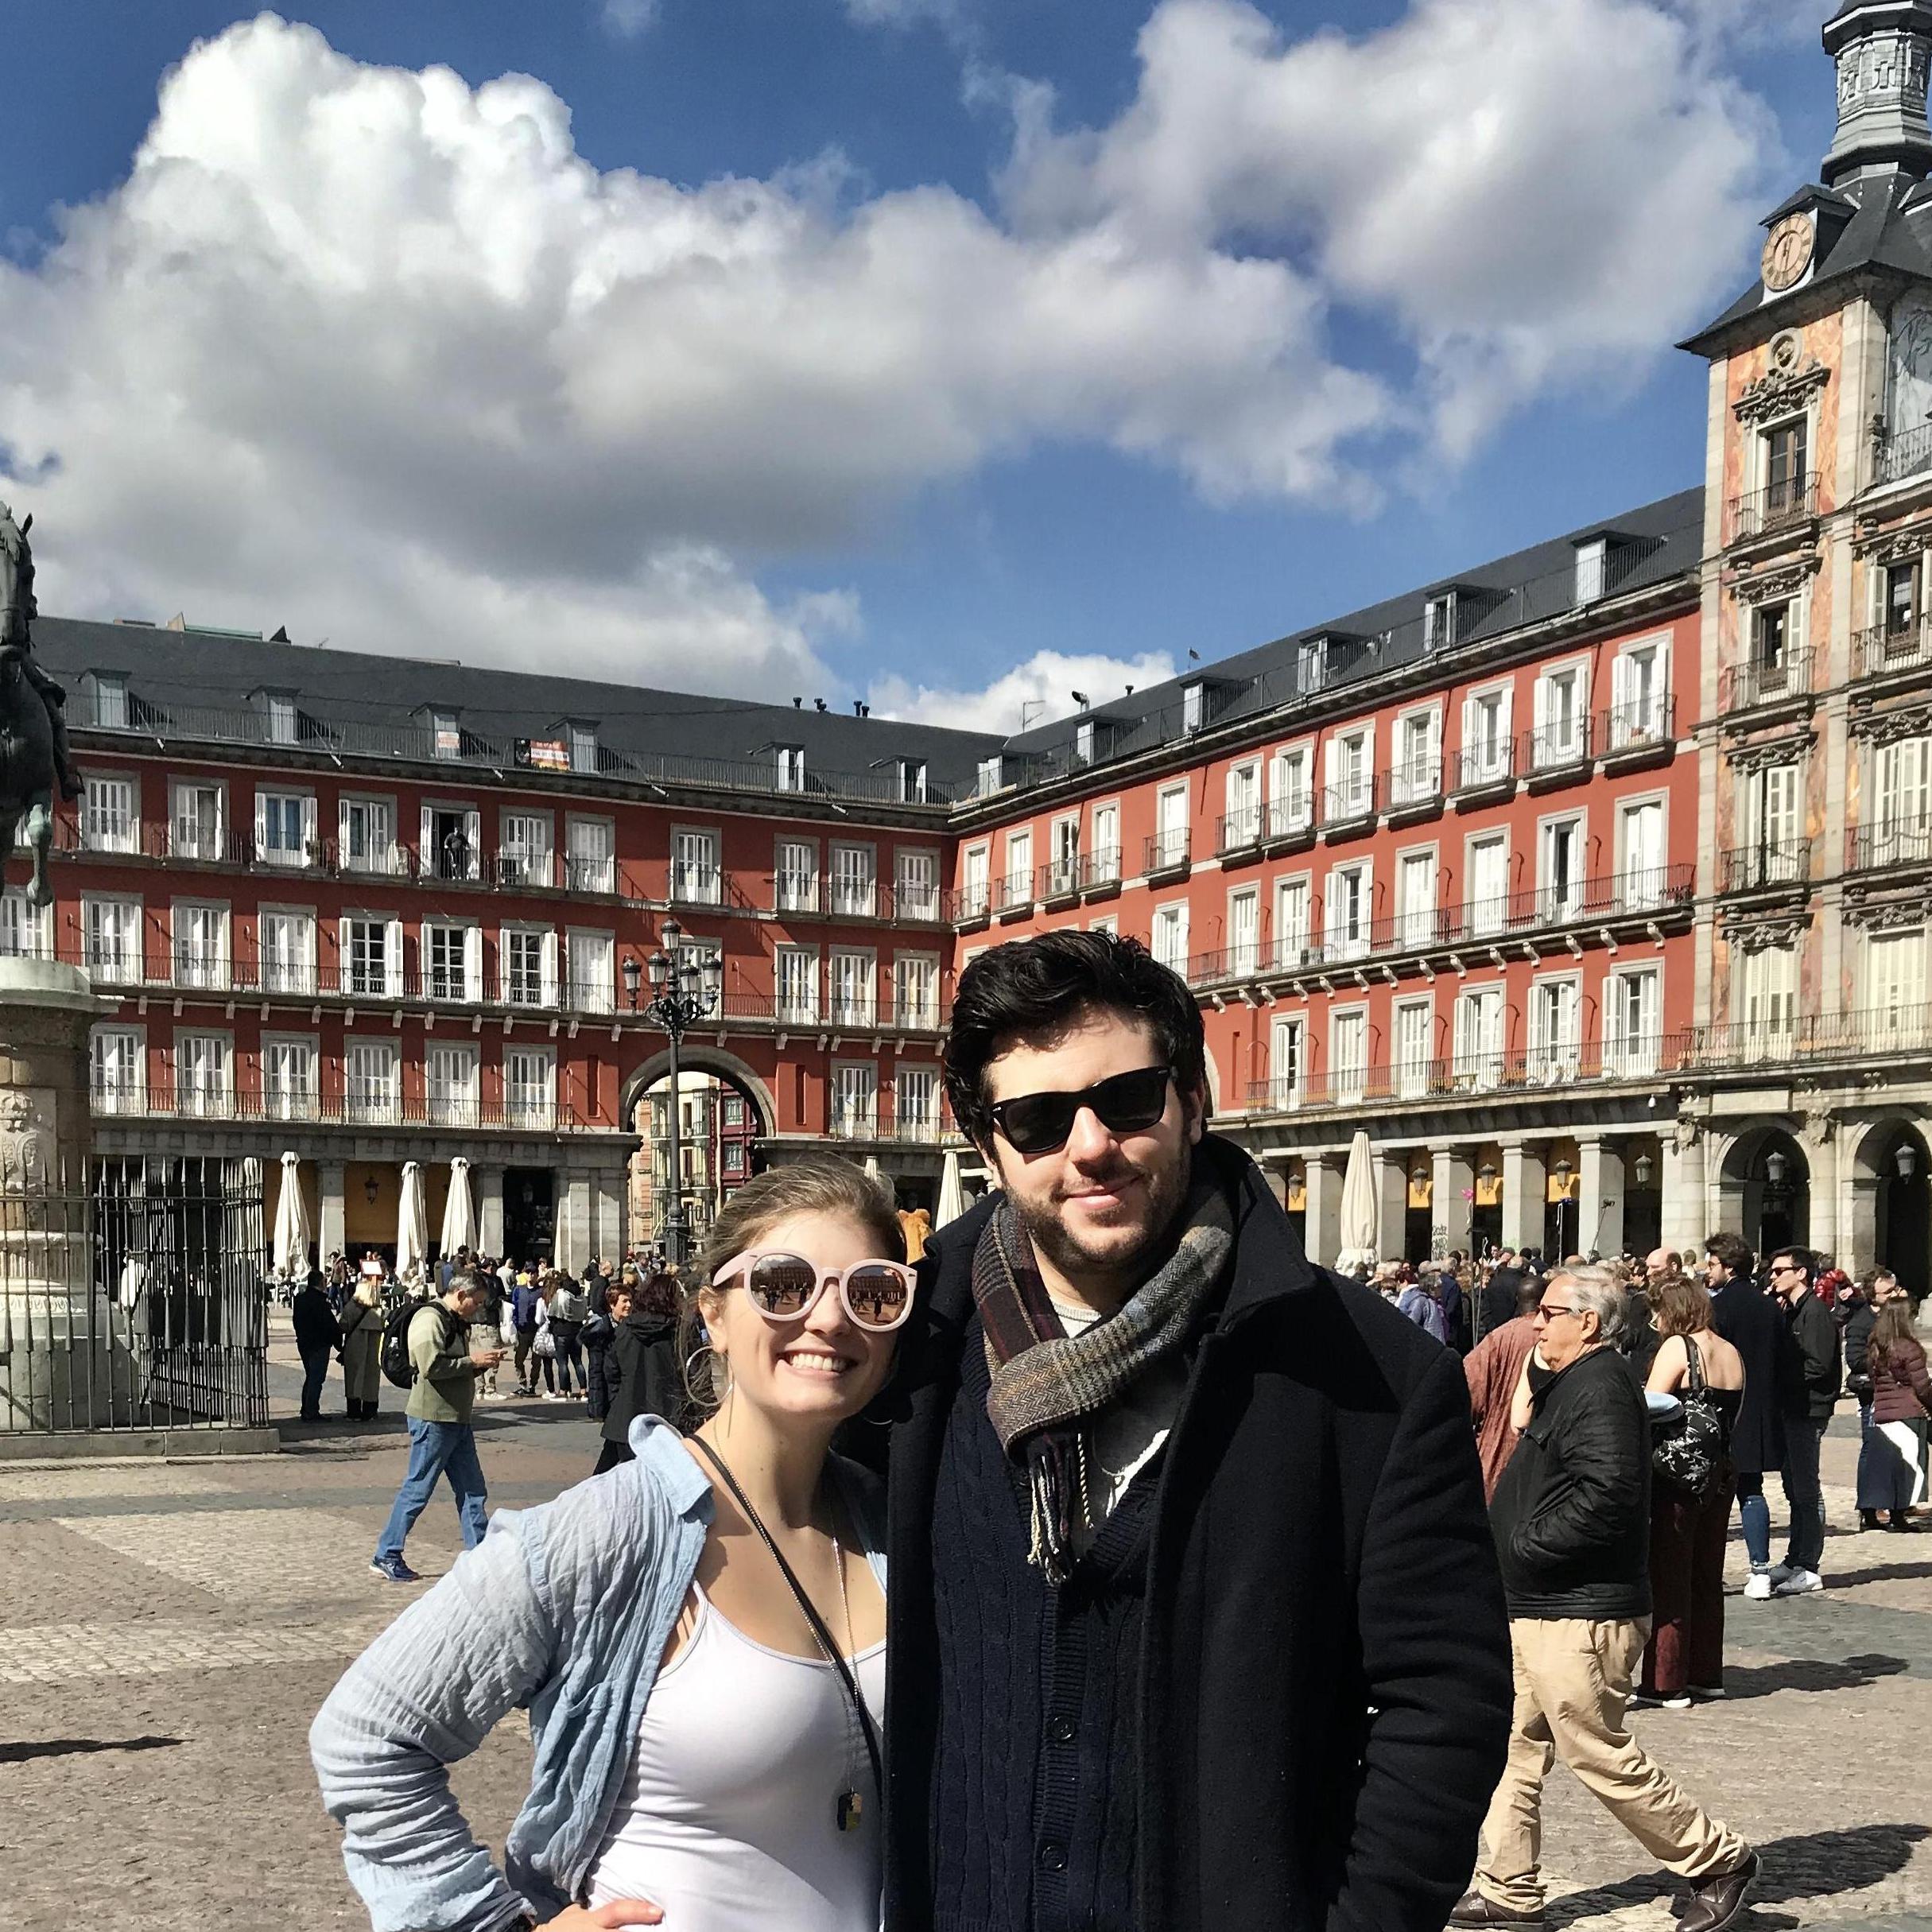 Wandering through Madrid's Plaza Mayor in Spain
2019